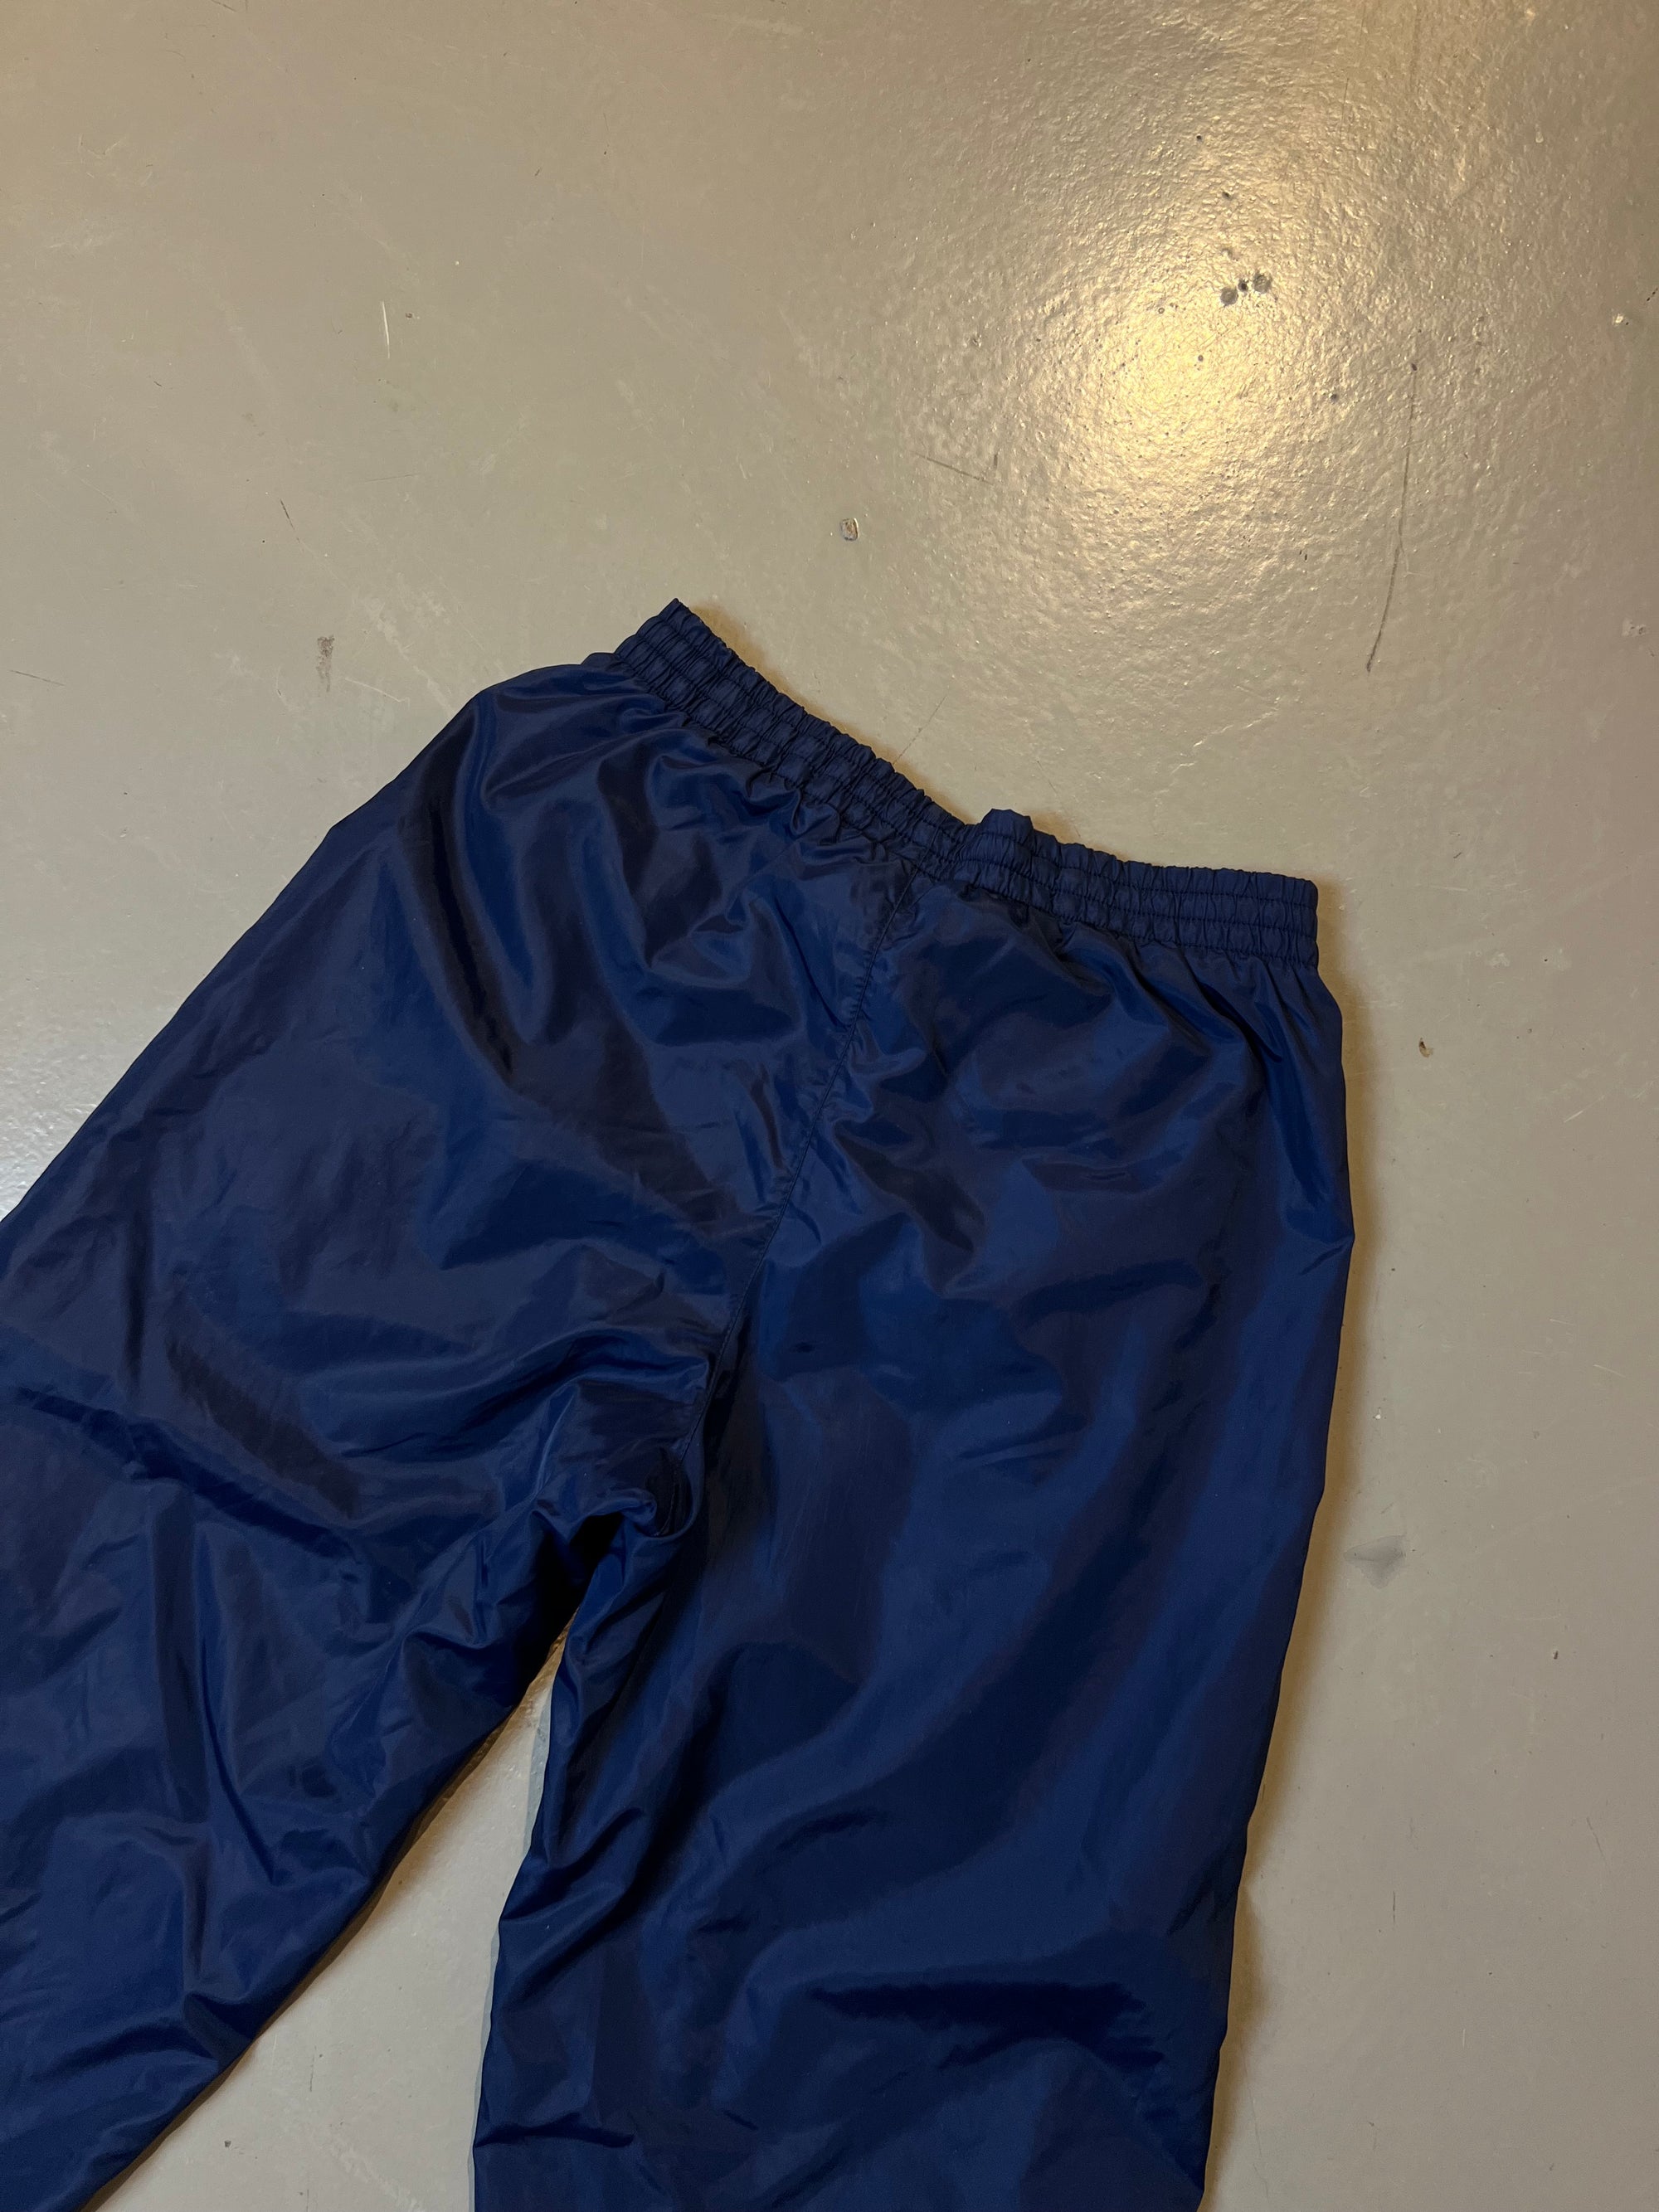 Vintage Nike Blue Track Pants S/M